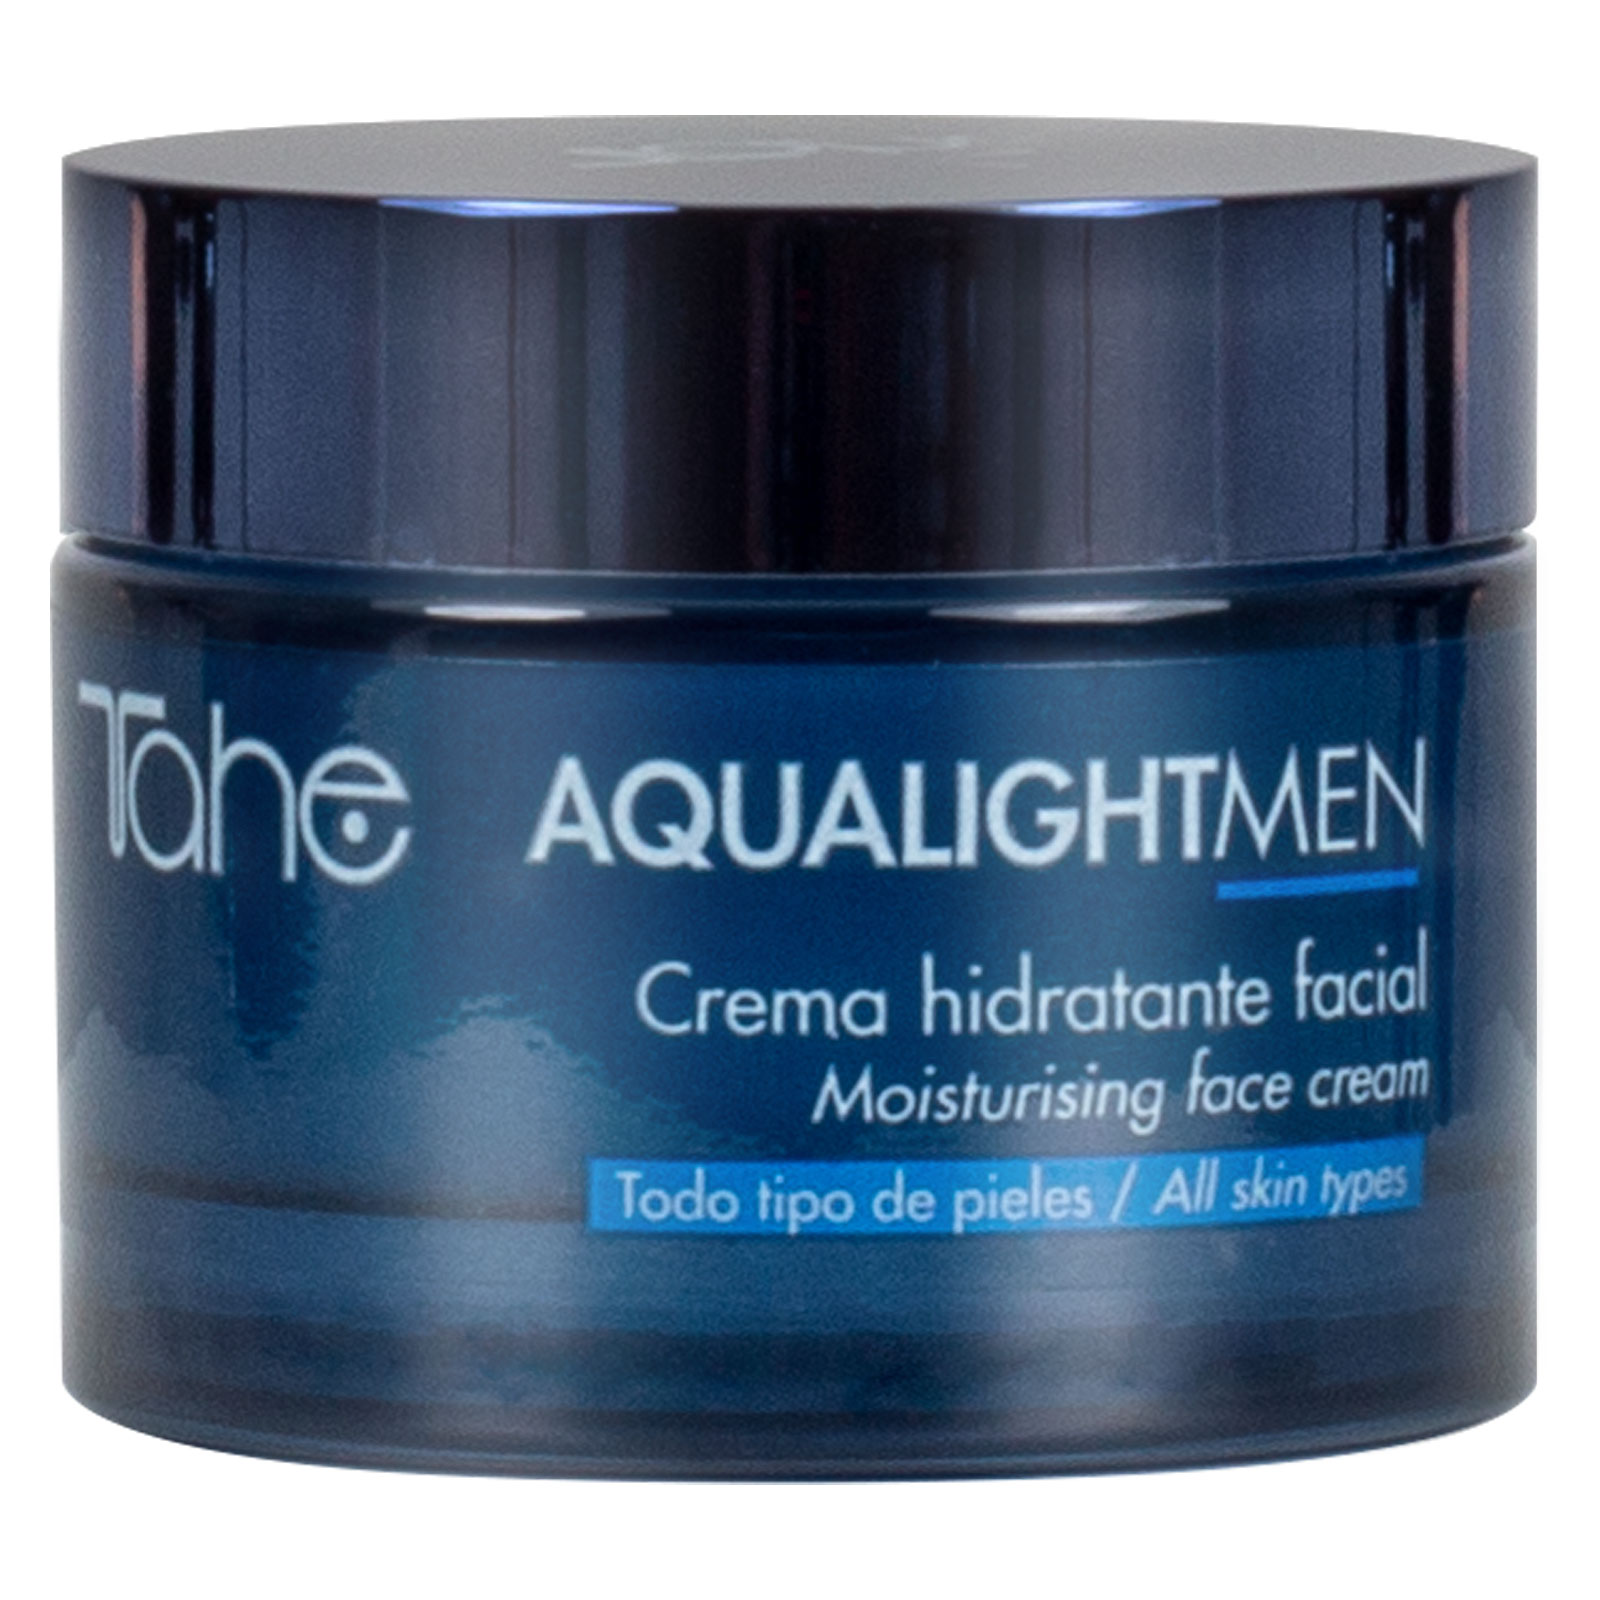 hidratante AquaLight Men | Tahe